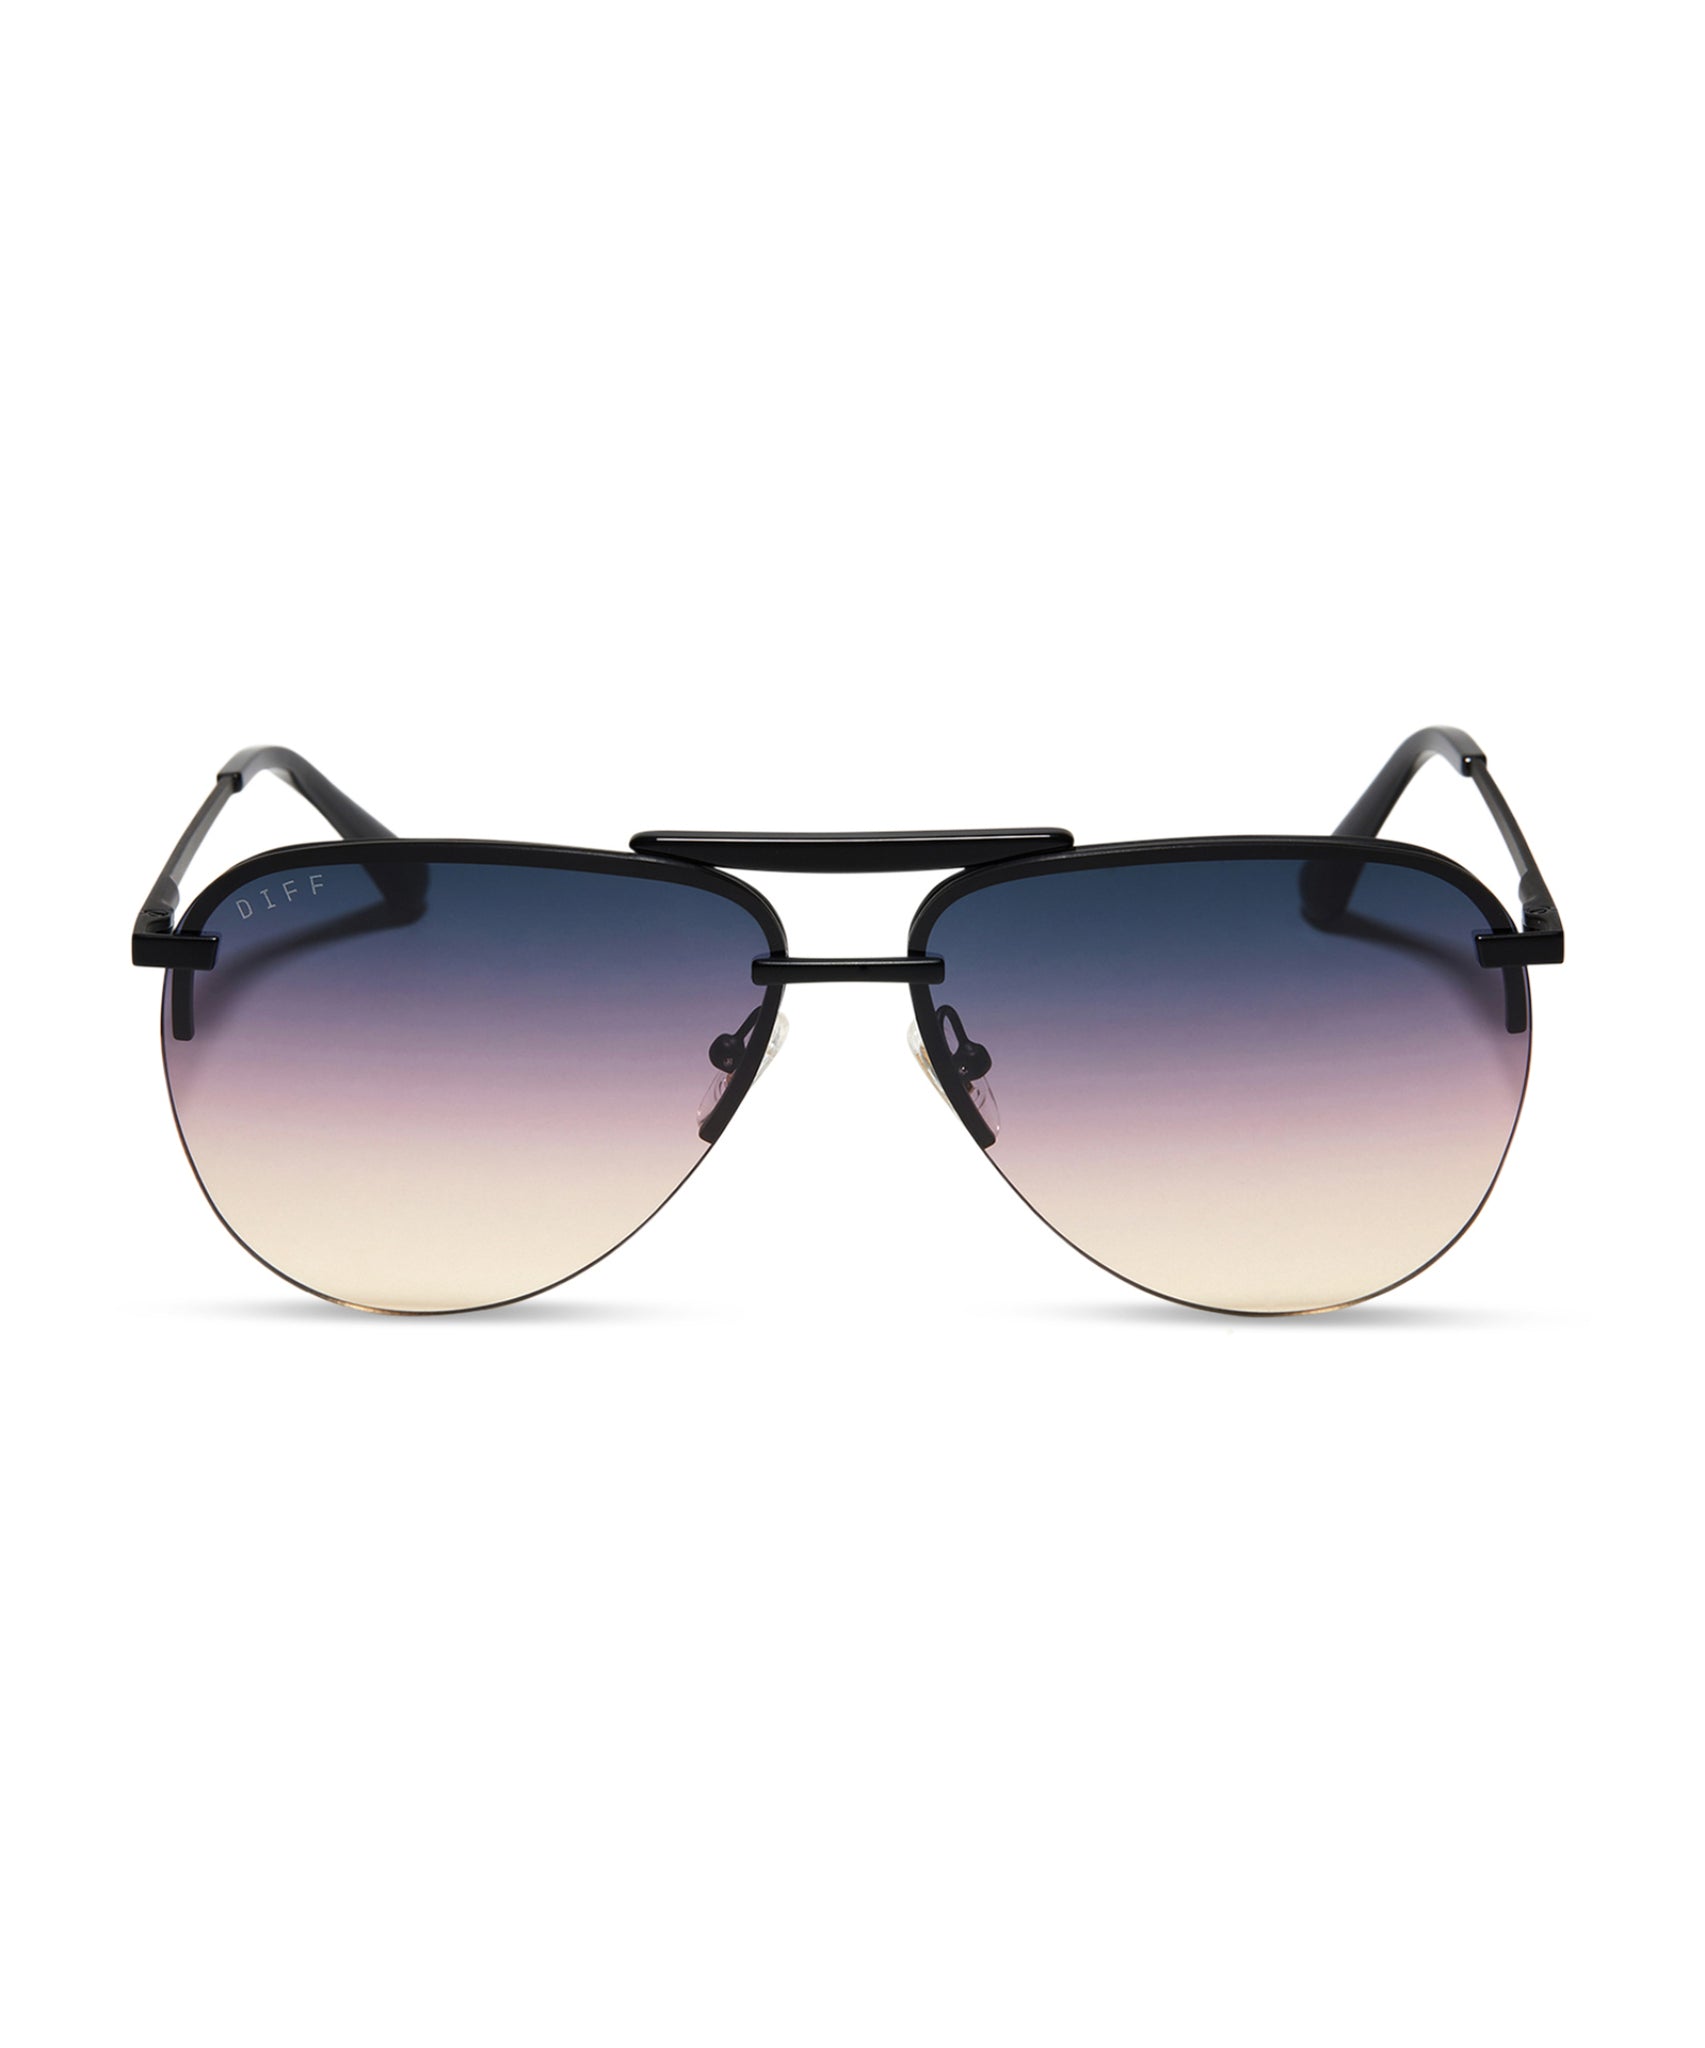 DIFF Sunglasses - Tahoe Black Matte